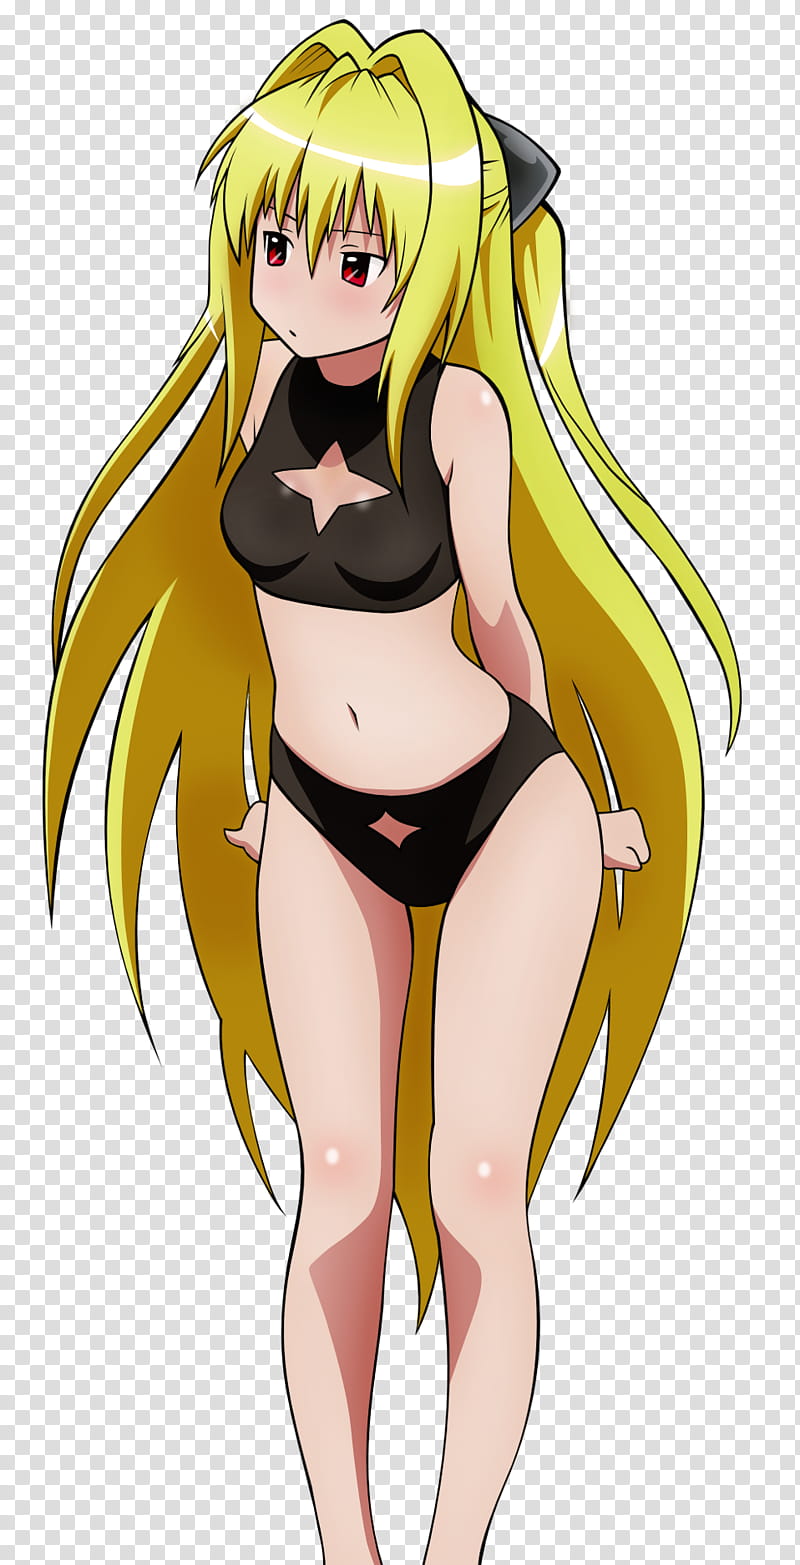 Yami Bikini, girl anime character transparent background PNG clipart